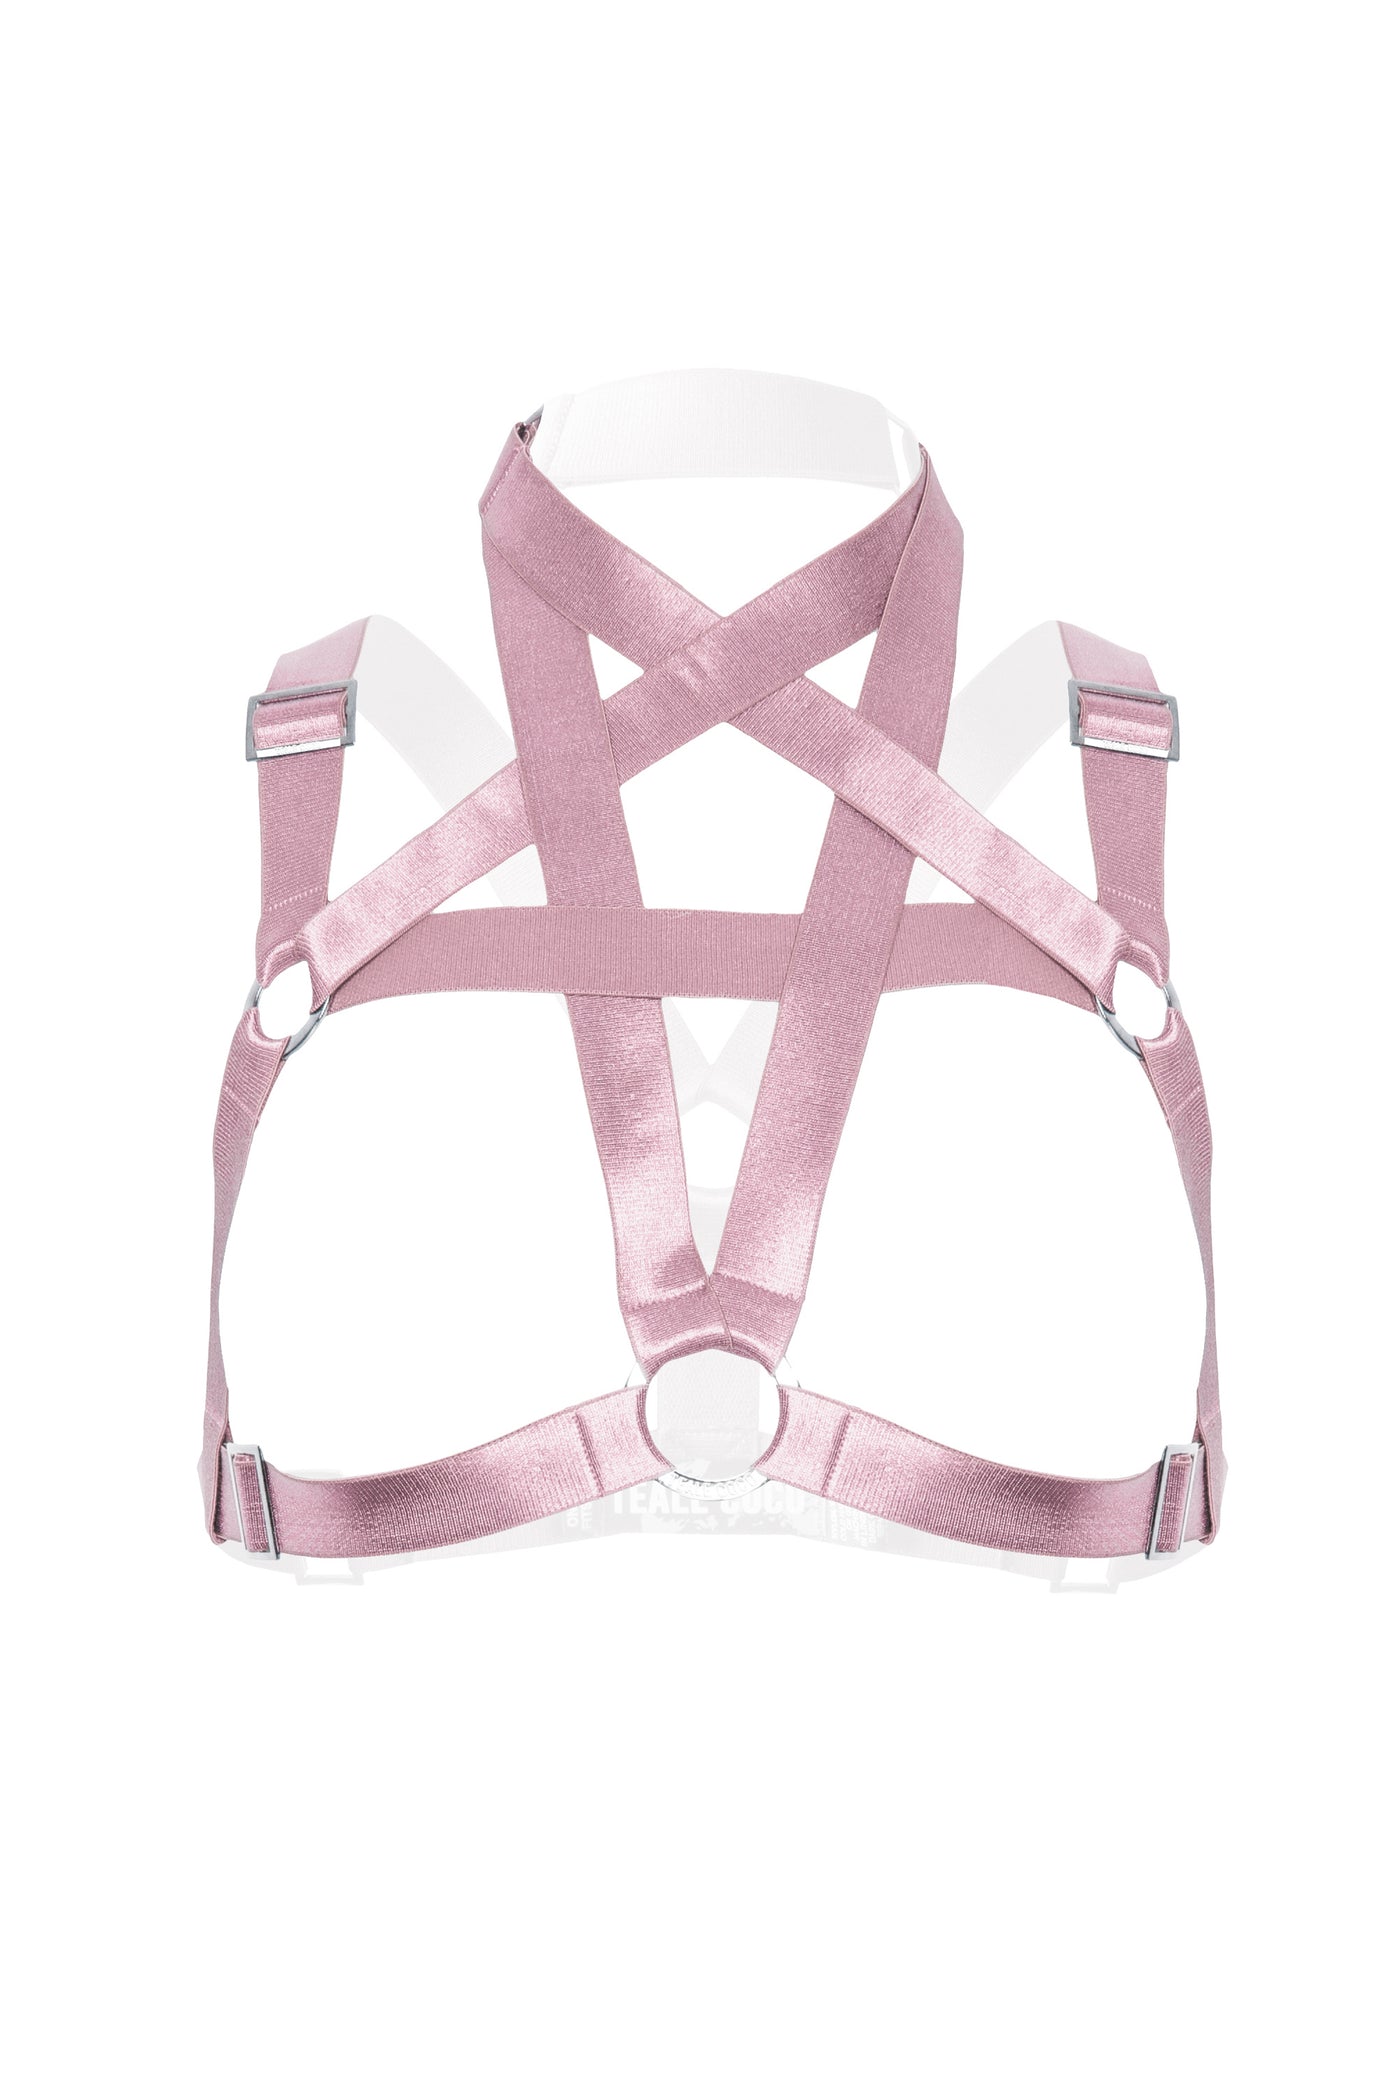 Pentagram Bust Harness (Dusted Pink)